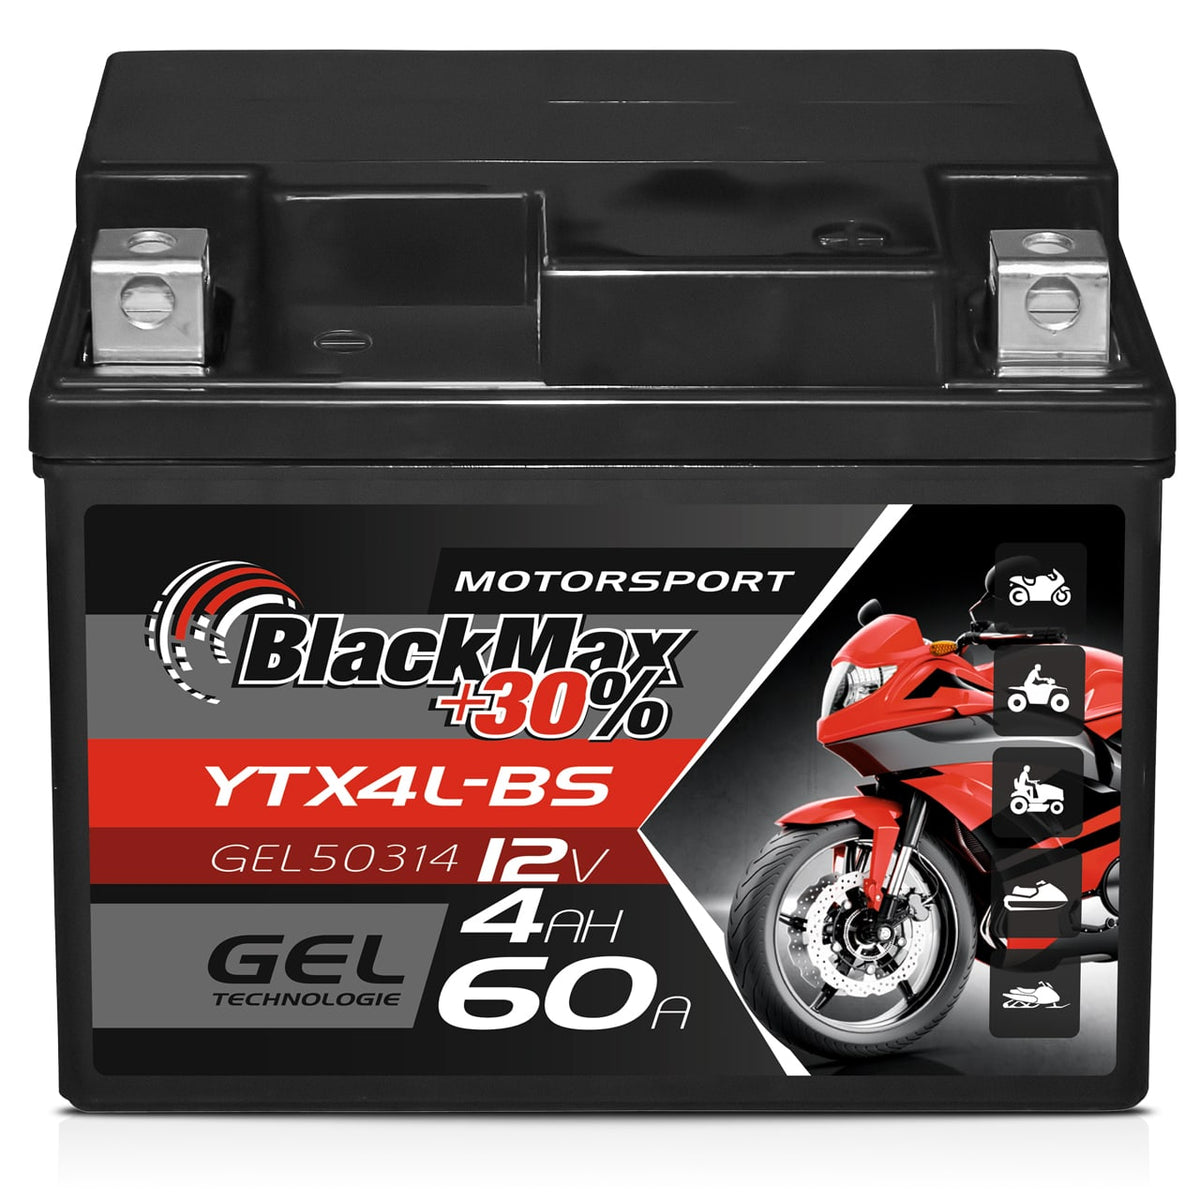 BlackMax +30% Motorsport YTX4L-BS 50314 GEL 12V 4Ah 60A/EN